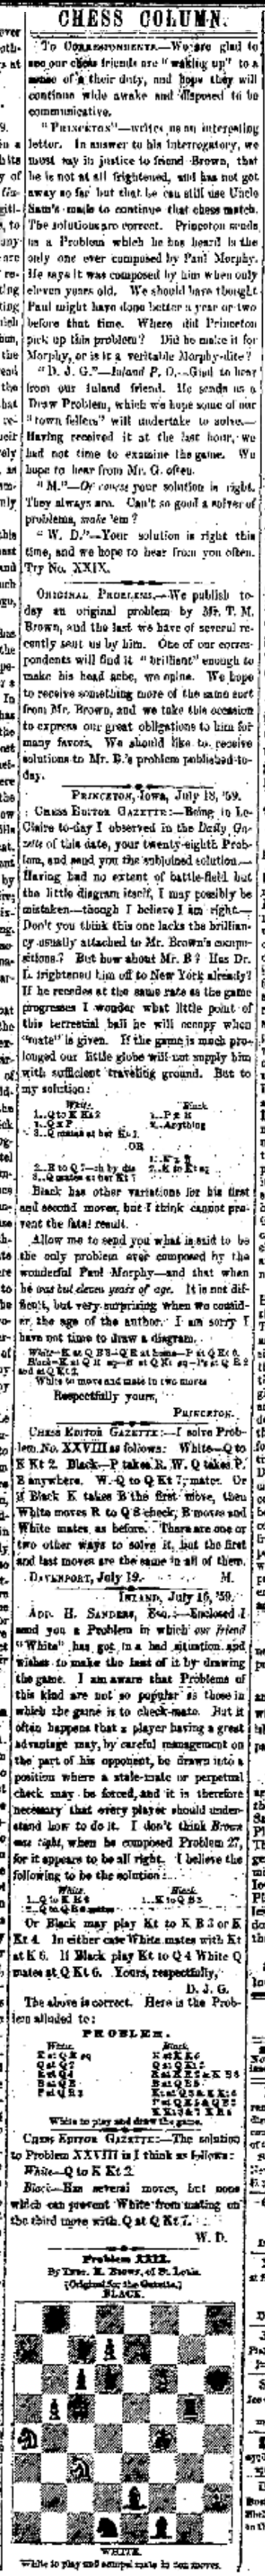 1859.07.22-01 Davenport Daily Gazette.png